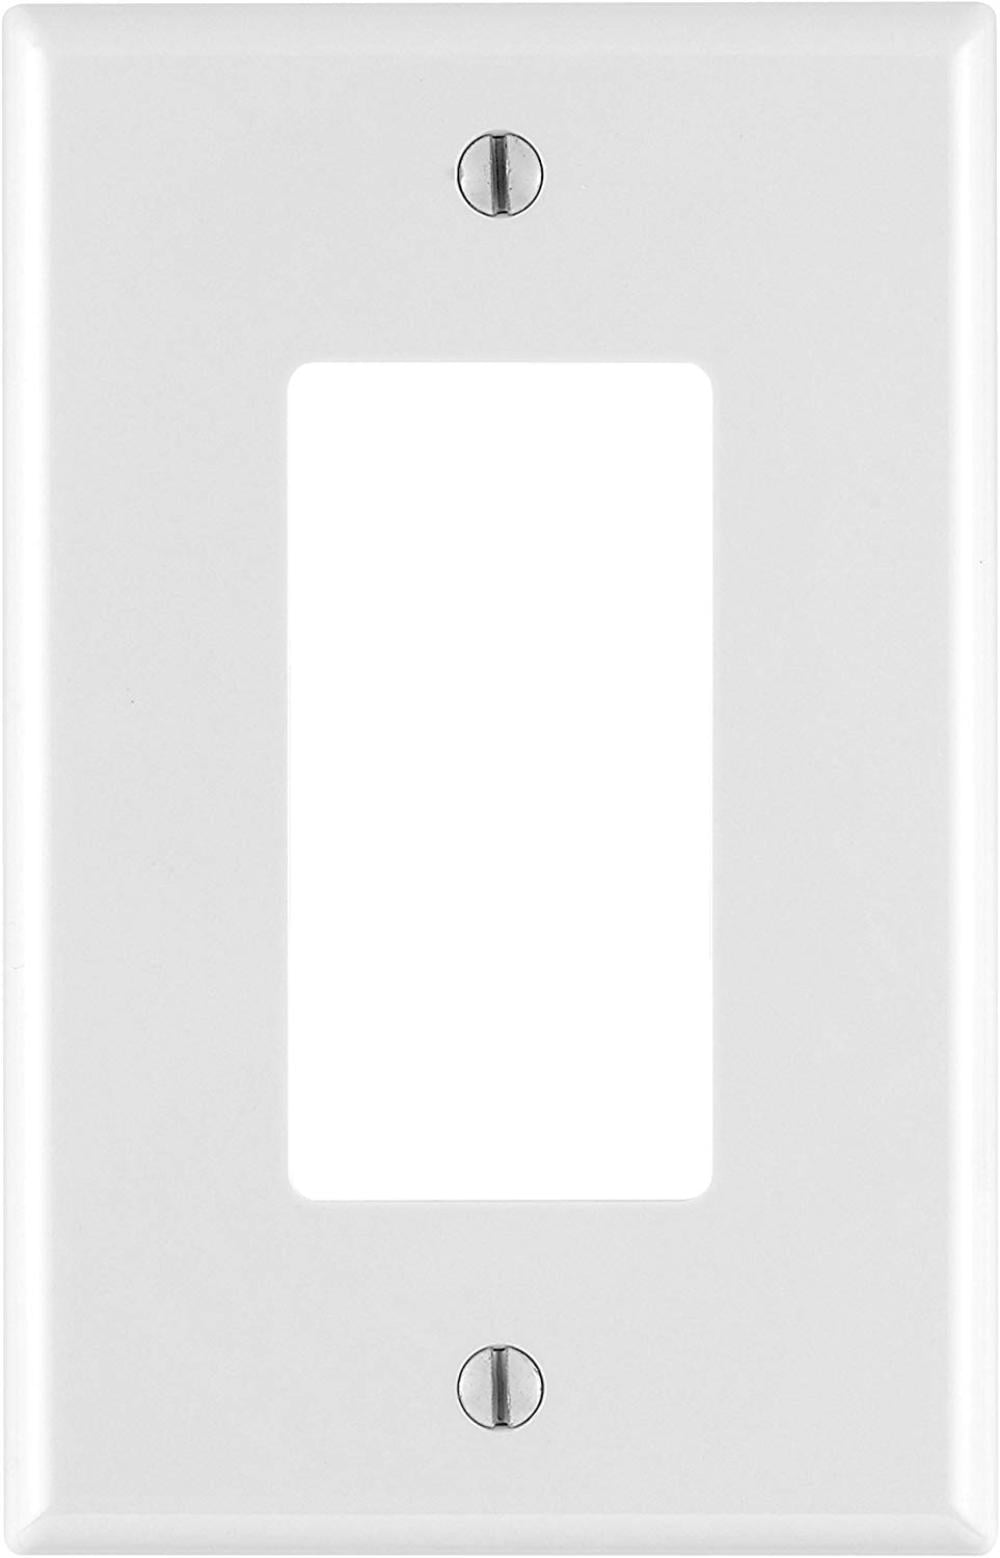 Standard Size Box Mount 10 quantity Leviton 80714-W 1-Gang No Device Blank Wallplate and Leviton PJ26-WM 1-Gang Decora/GFCI Wallplate 10-Pack Thermoplastic Nylon White White